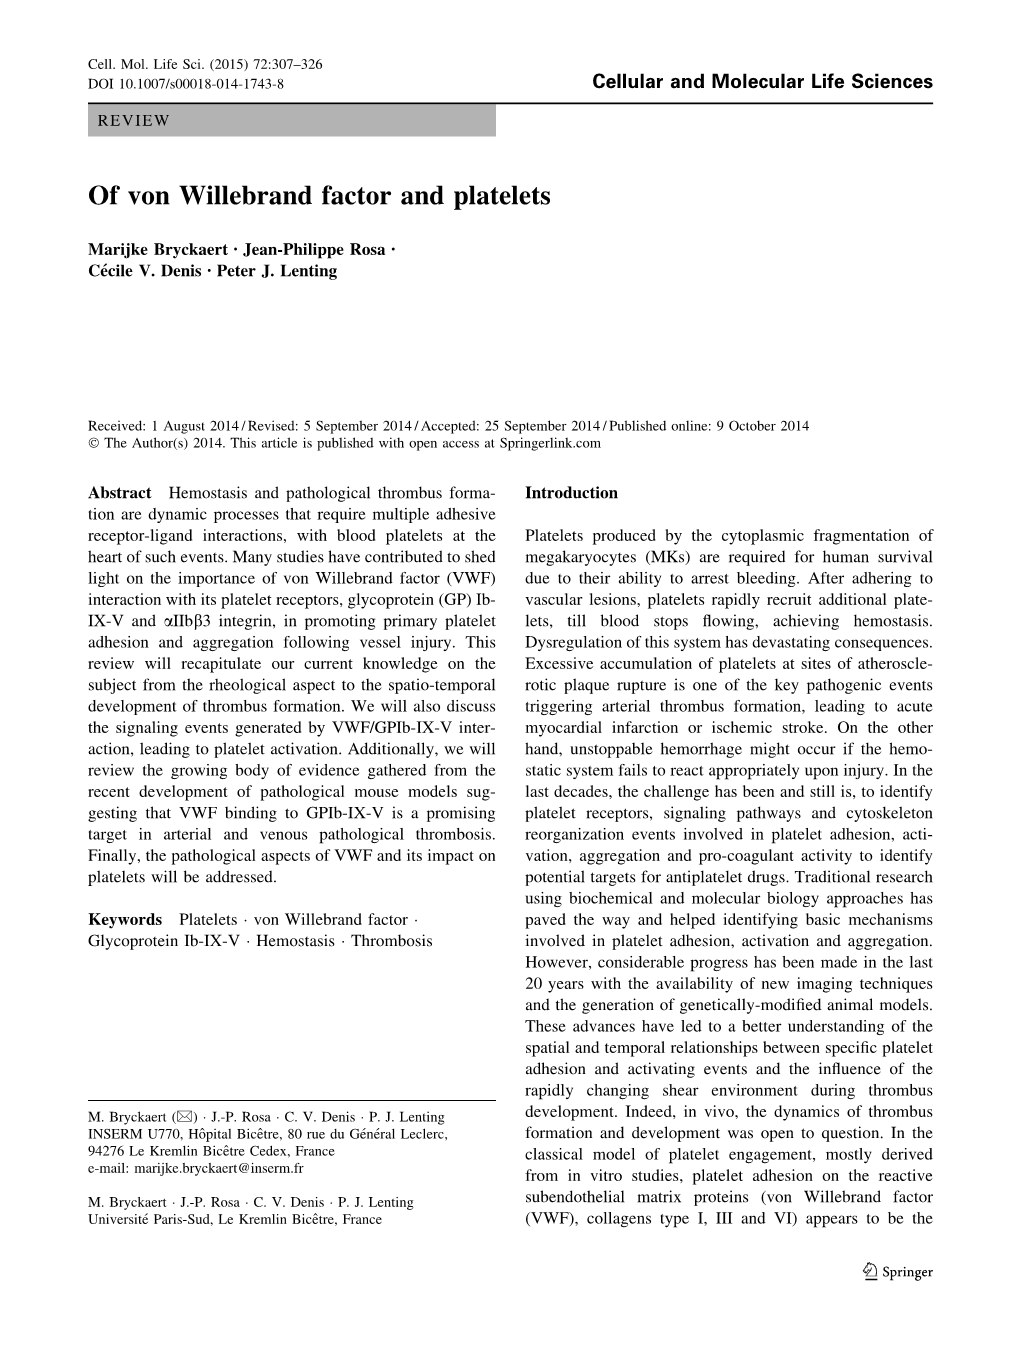 Of Von Willebrand Factor and Platelets